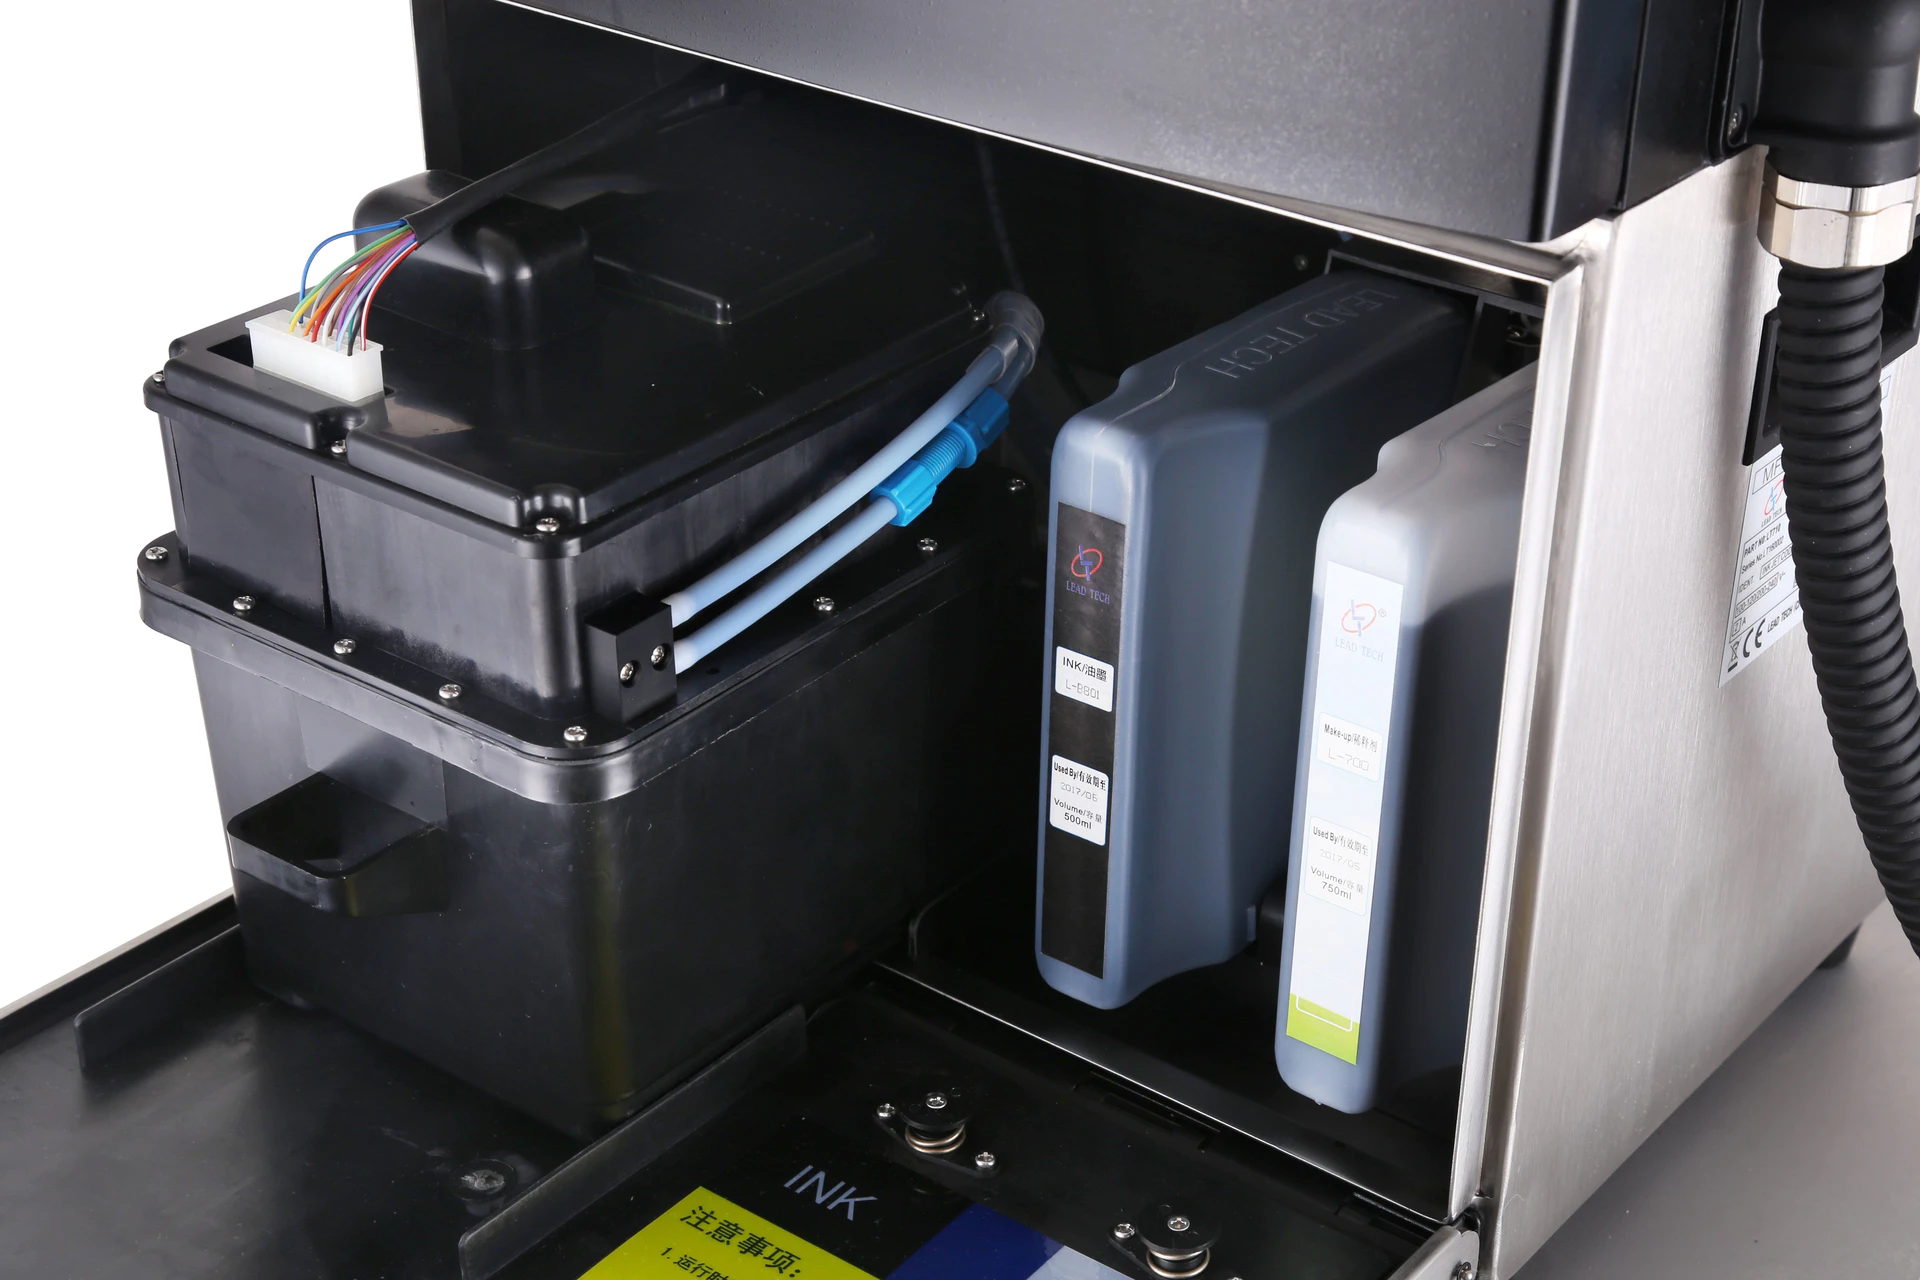 Lead Tech Lt710 Plastic film Continuous Cij Inkjet Printer